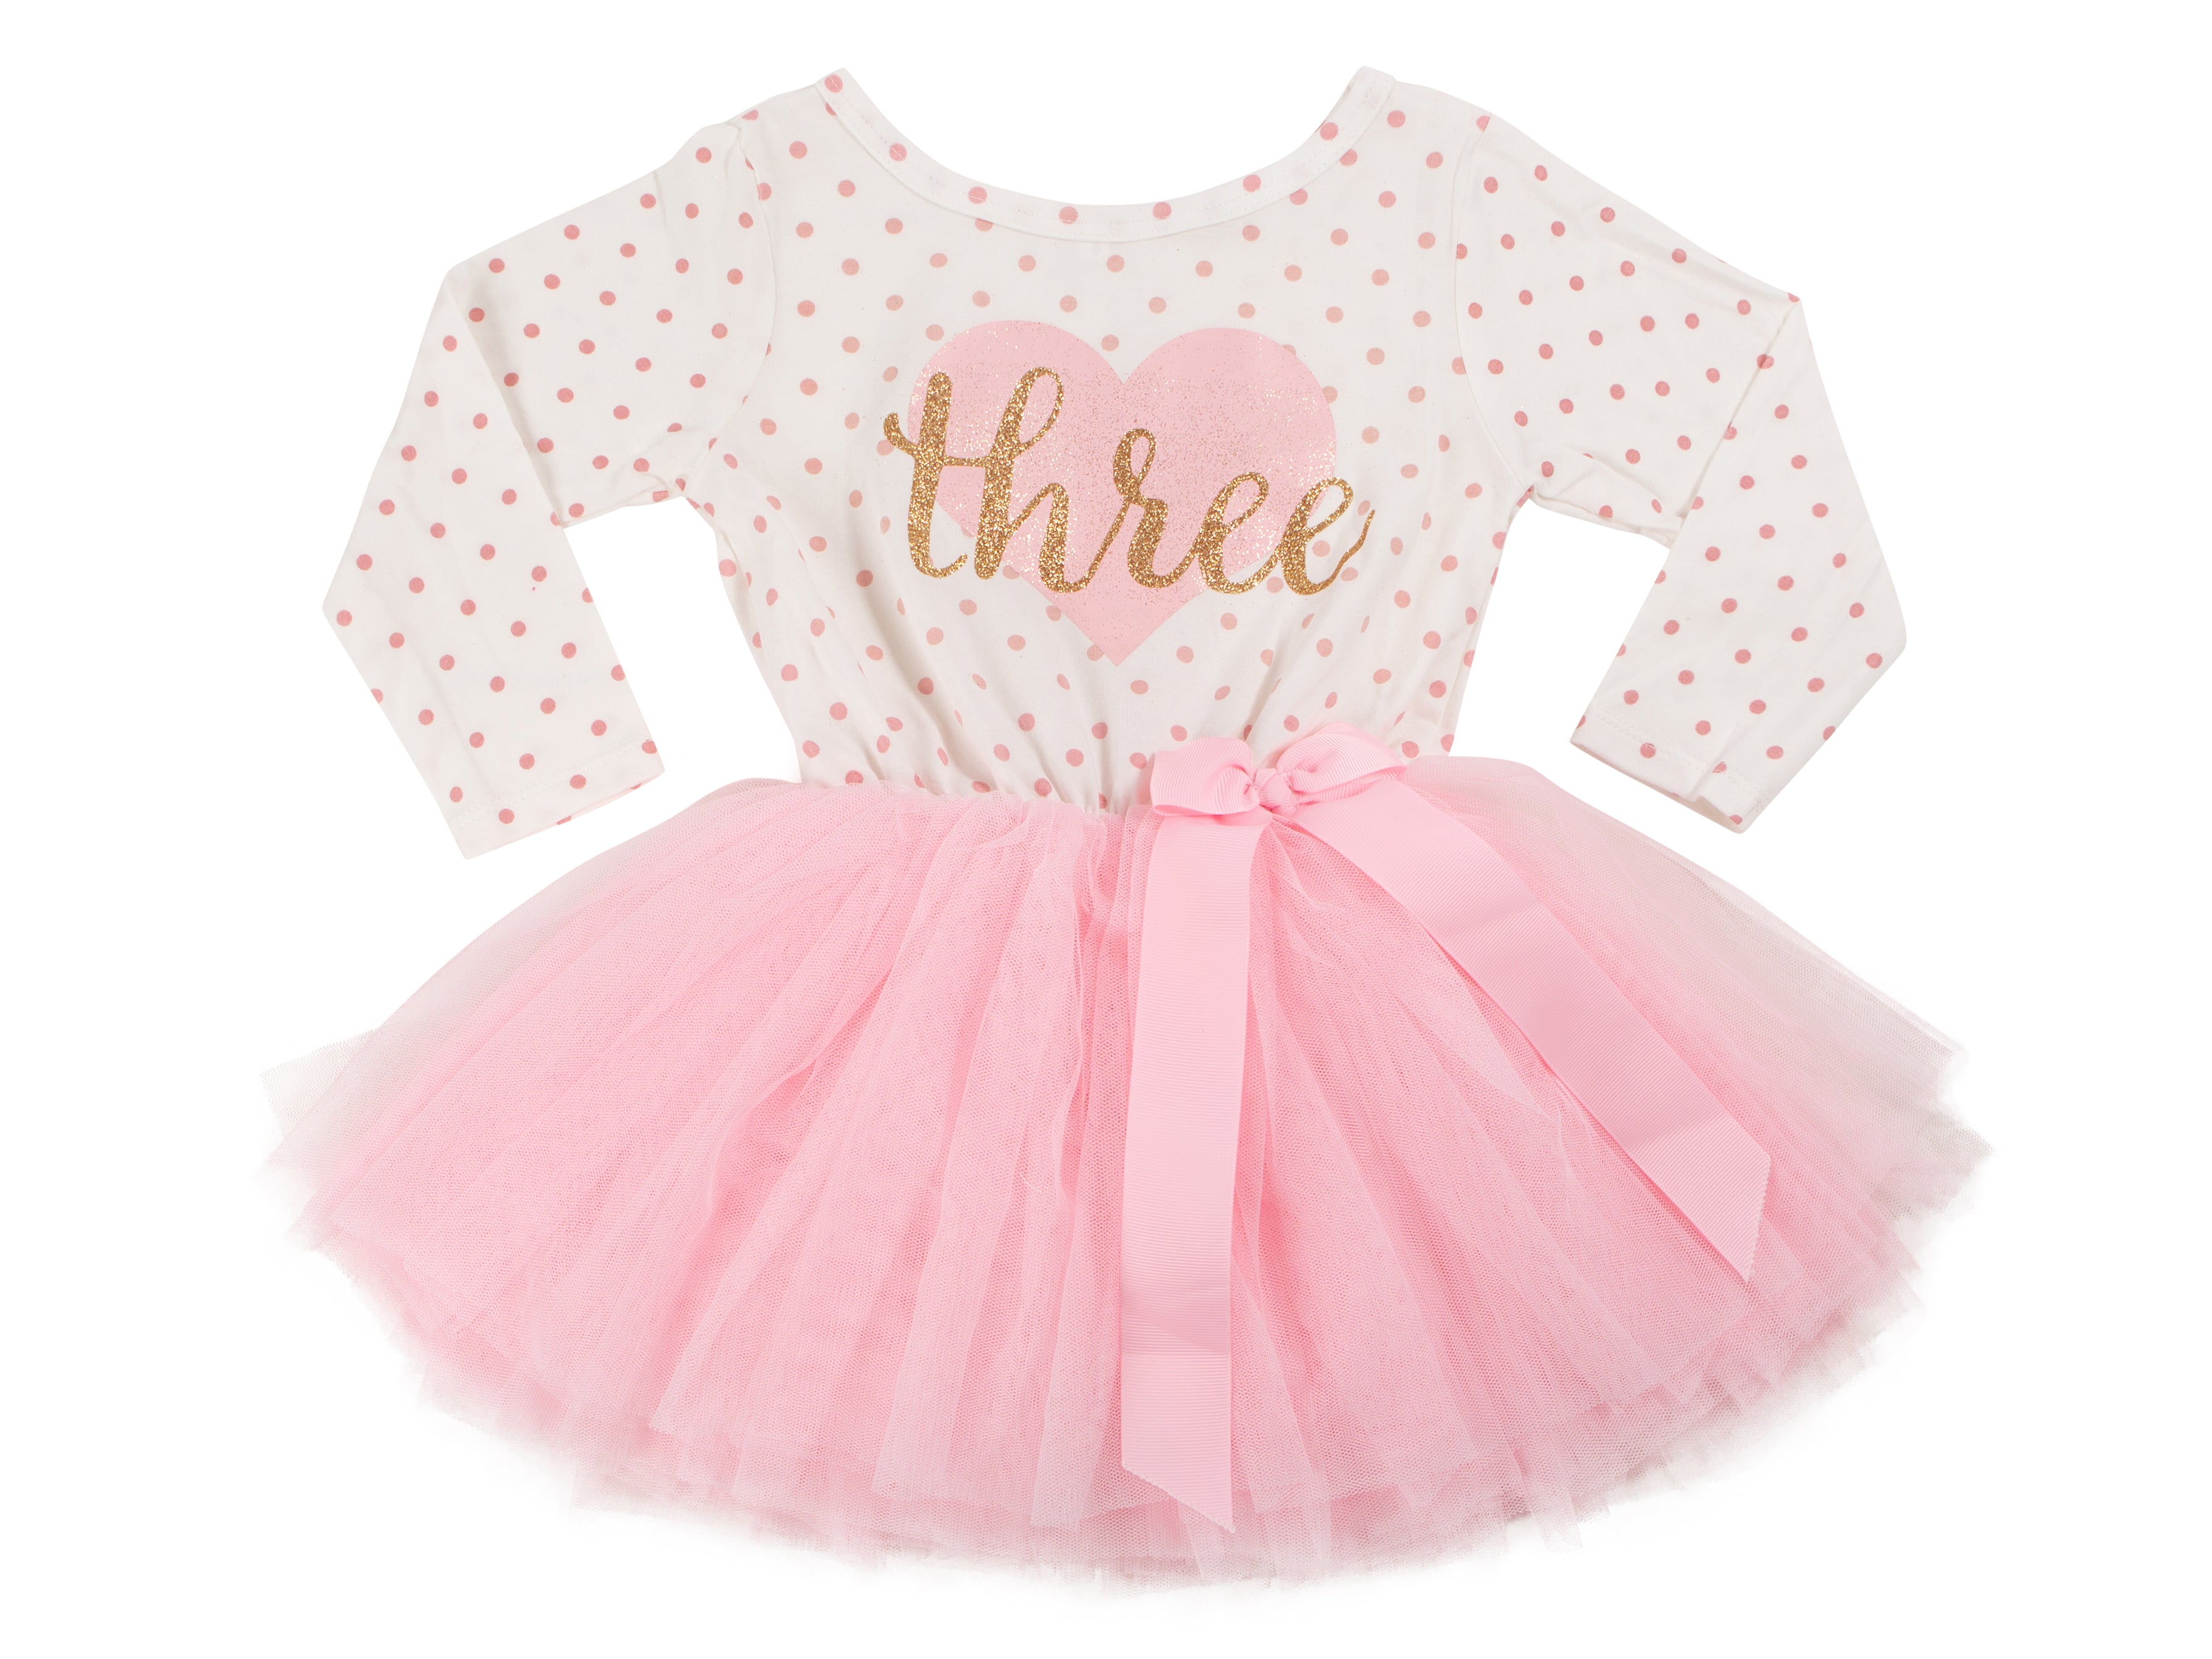 3rd Birthday Dress - Polka Dot (Long Sleeve) - Grace and Lucille